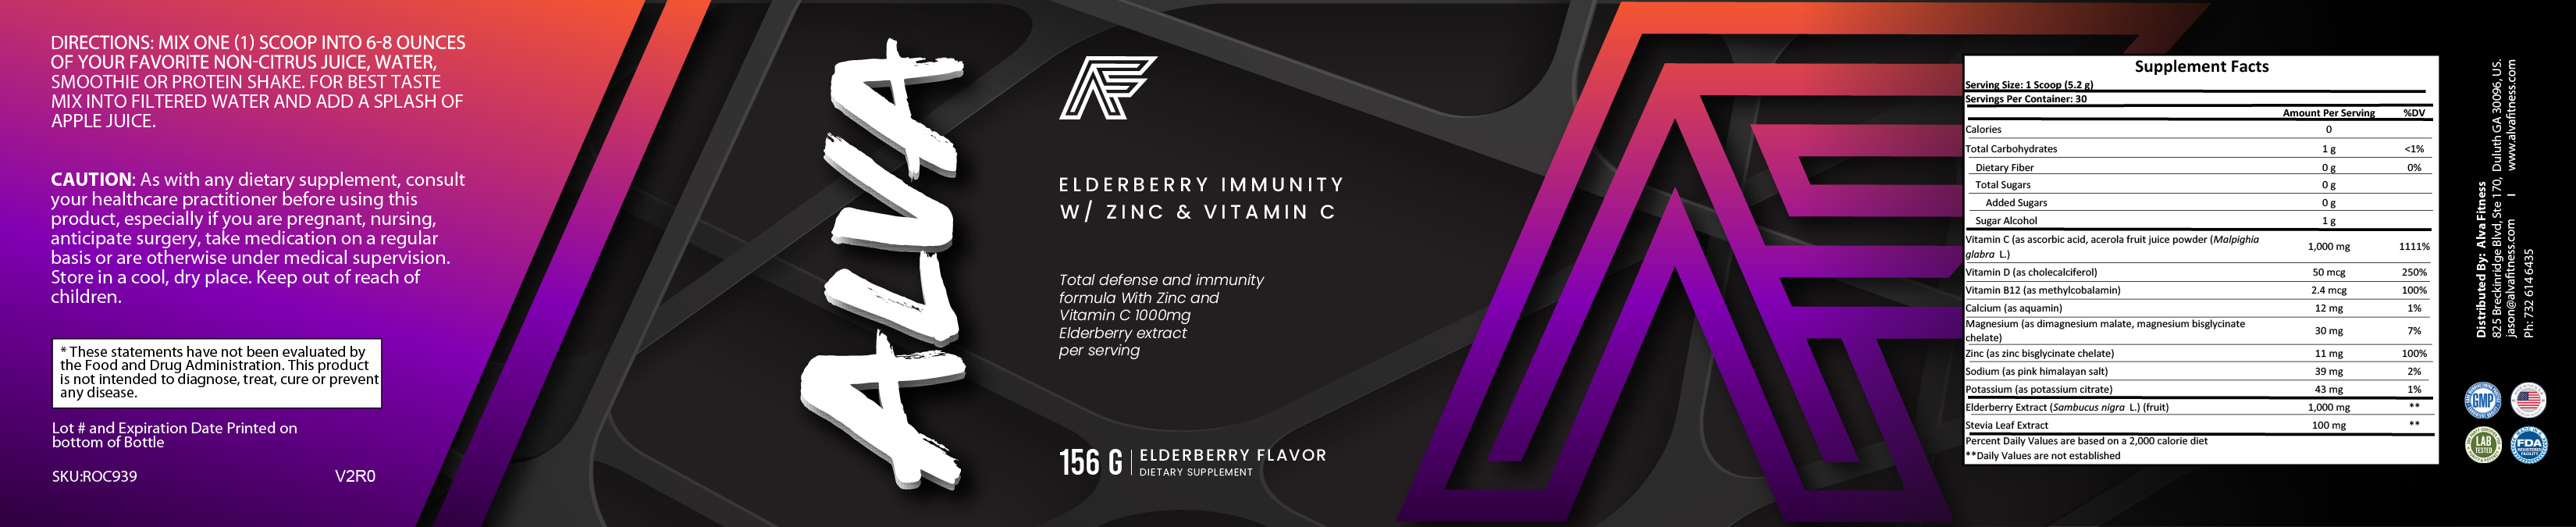 Elderberry Immunity